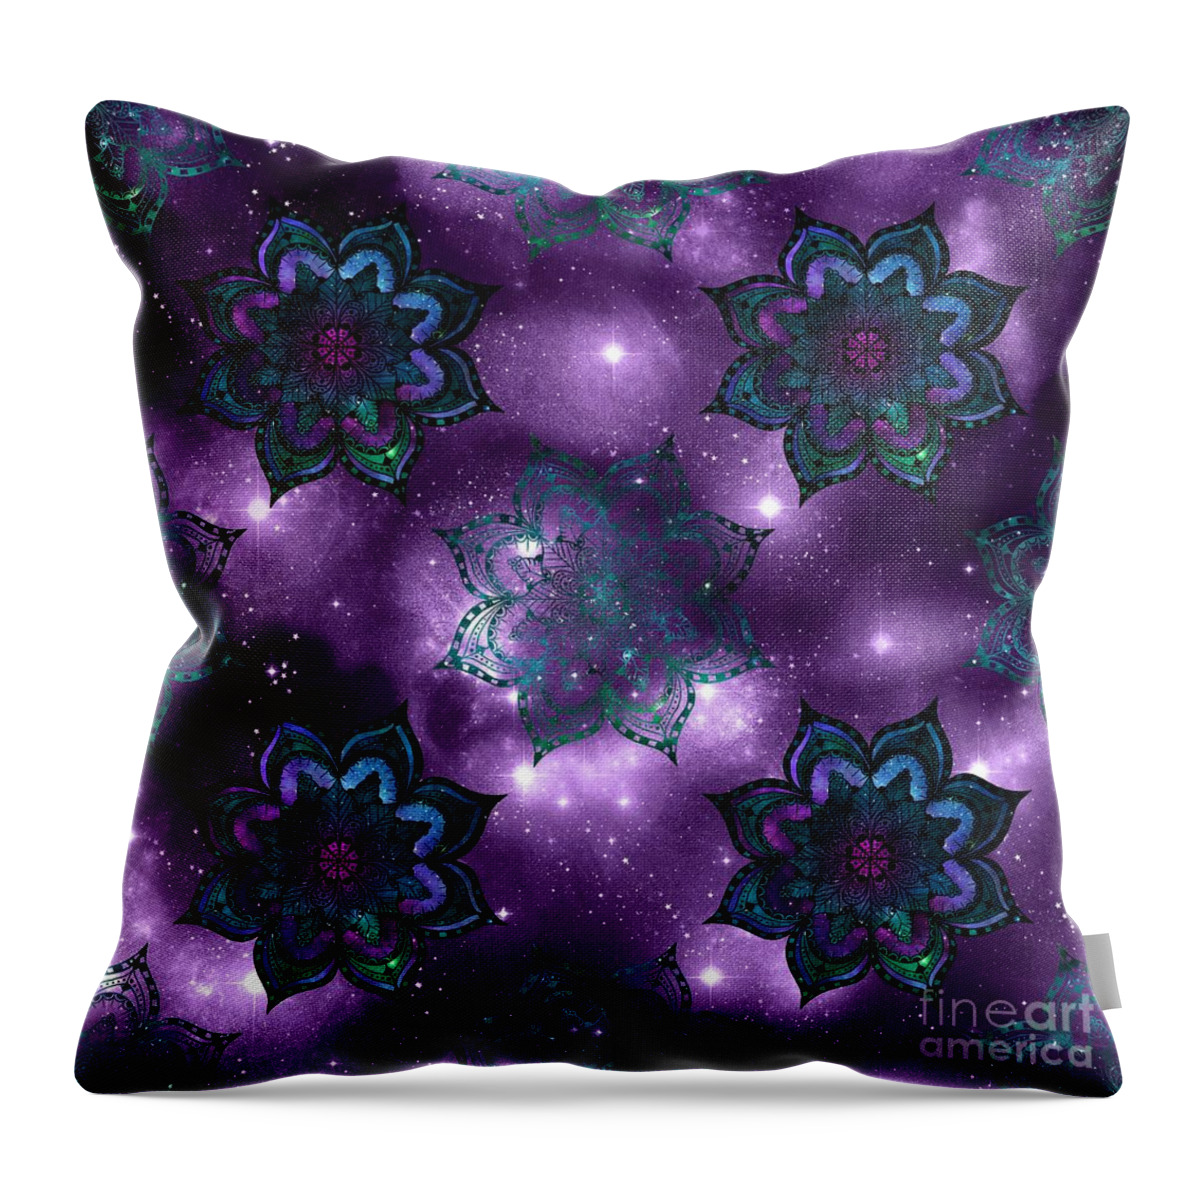 Watercolor Throw Pillow featuring the digital art Matava - Purple Watercolor Mandala Galaxy Dharma Pattern by Sambel Pedes